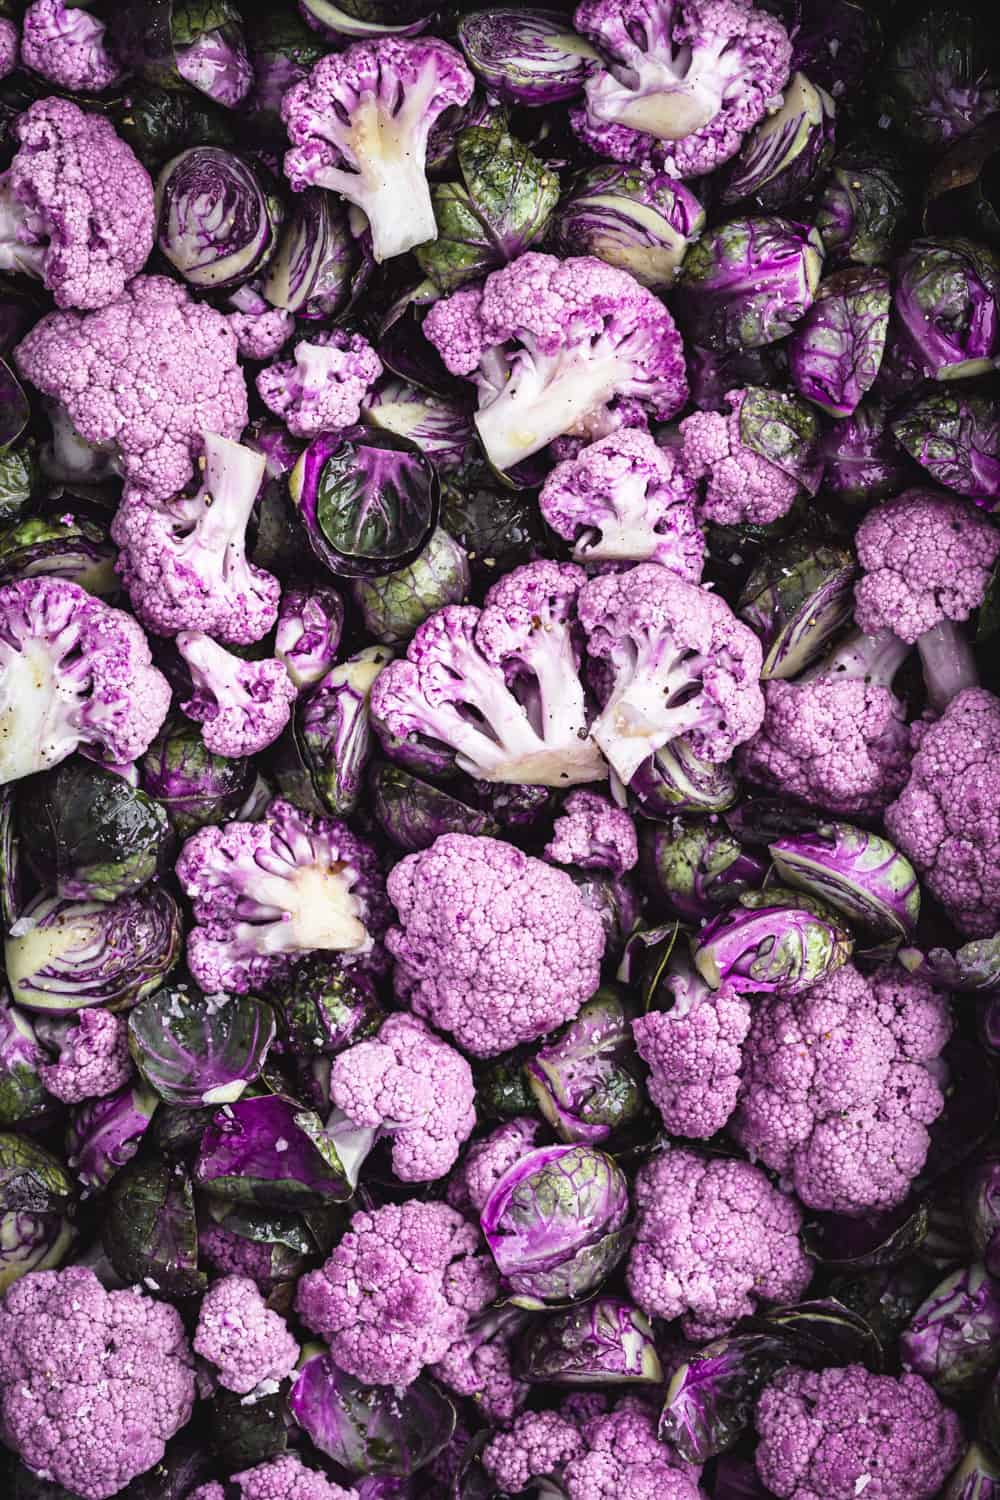 purple cauliflower florets and purple Brussel sprouts